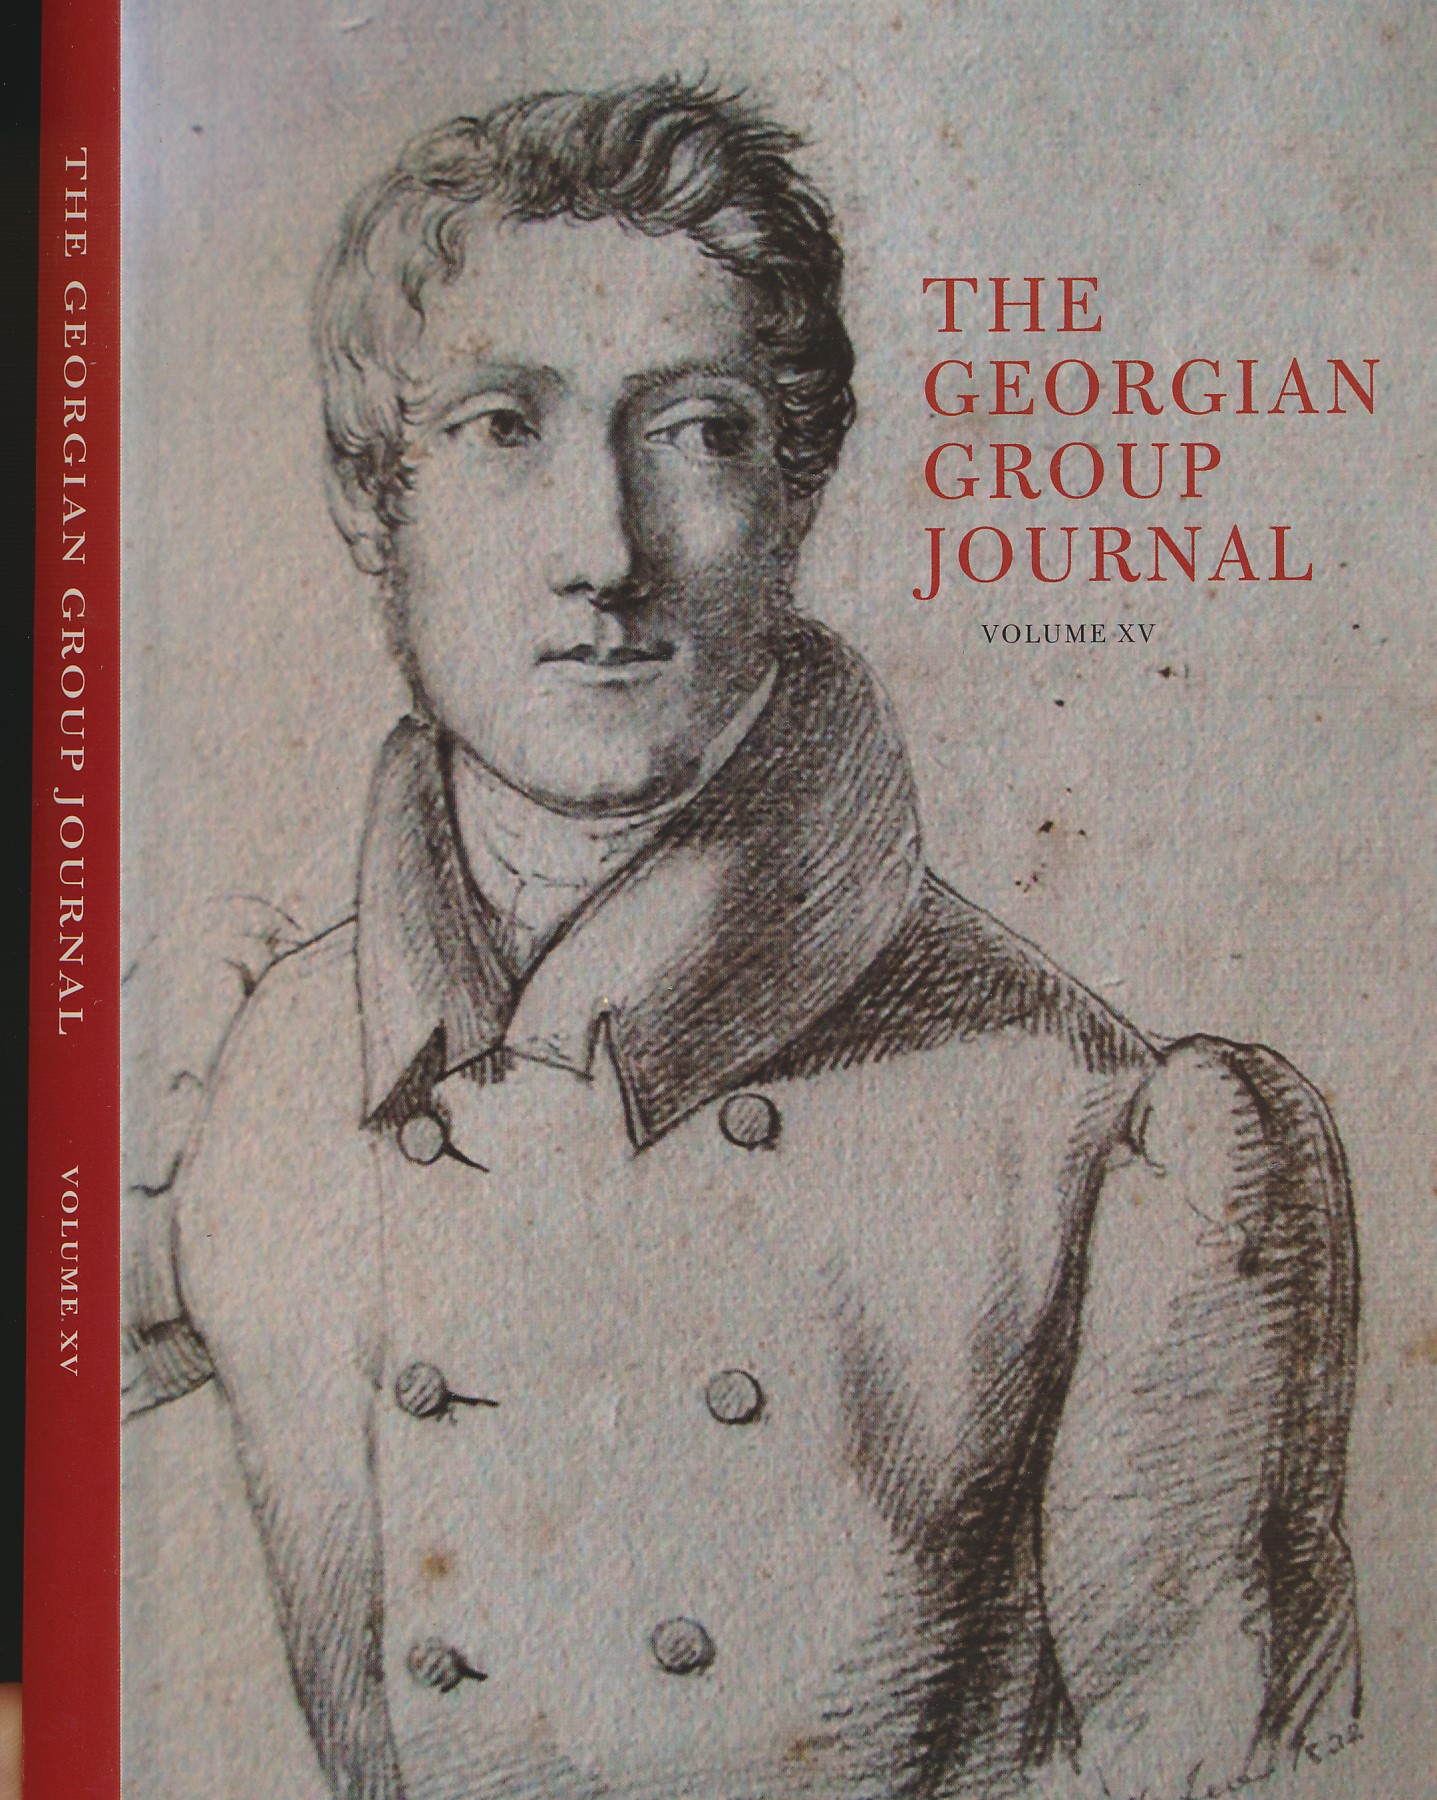 The Georgian Group Journal. Volume XV [2006]